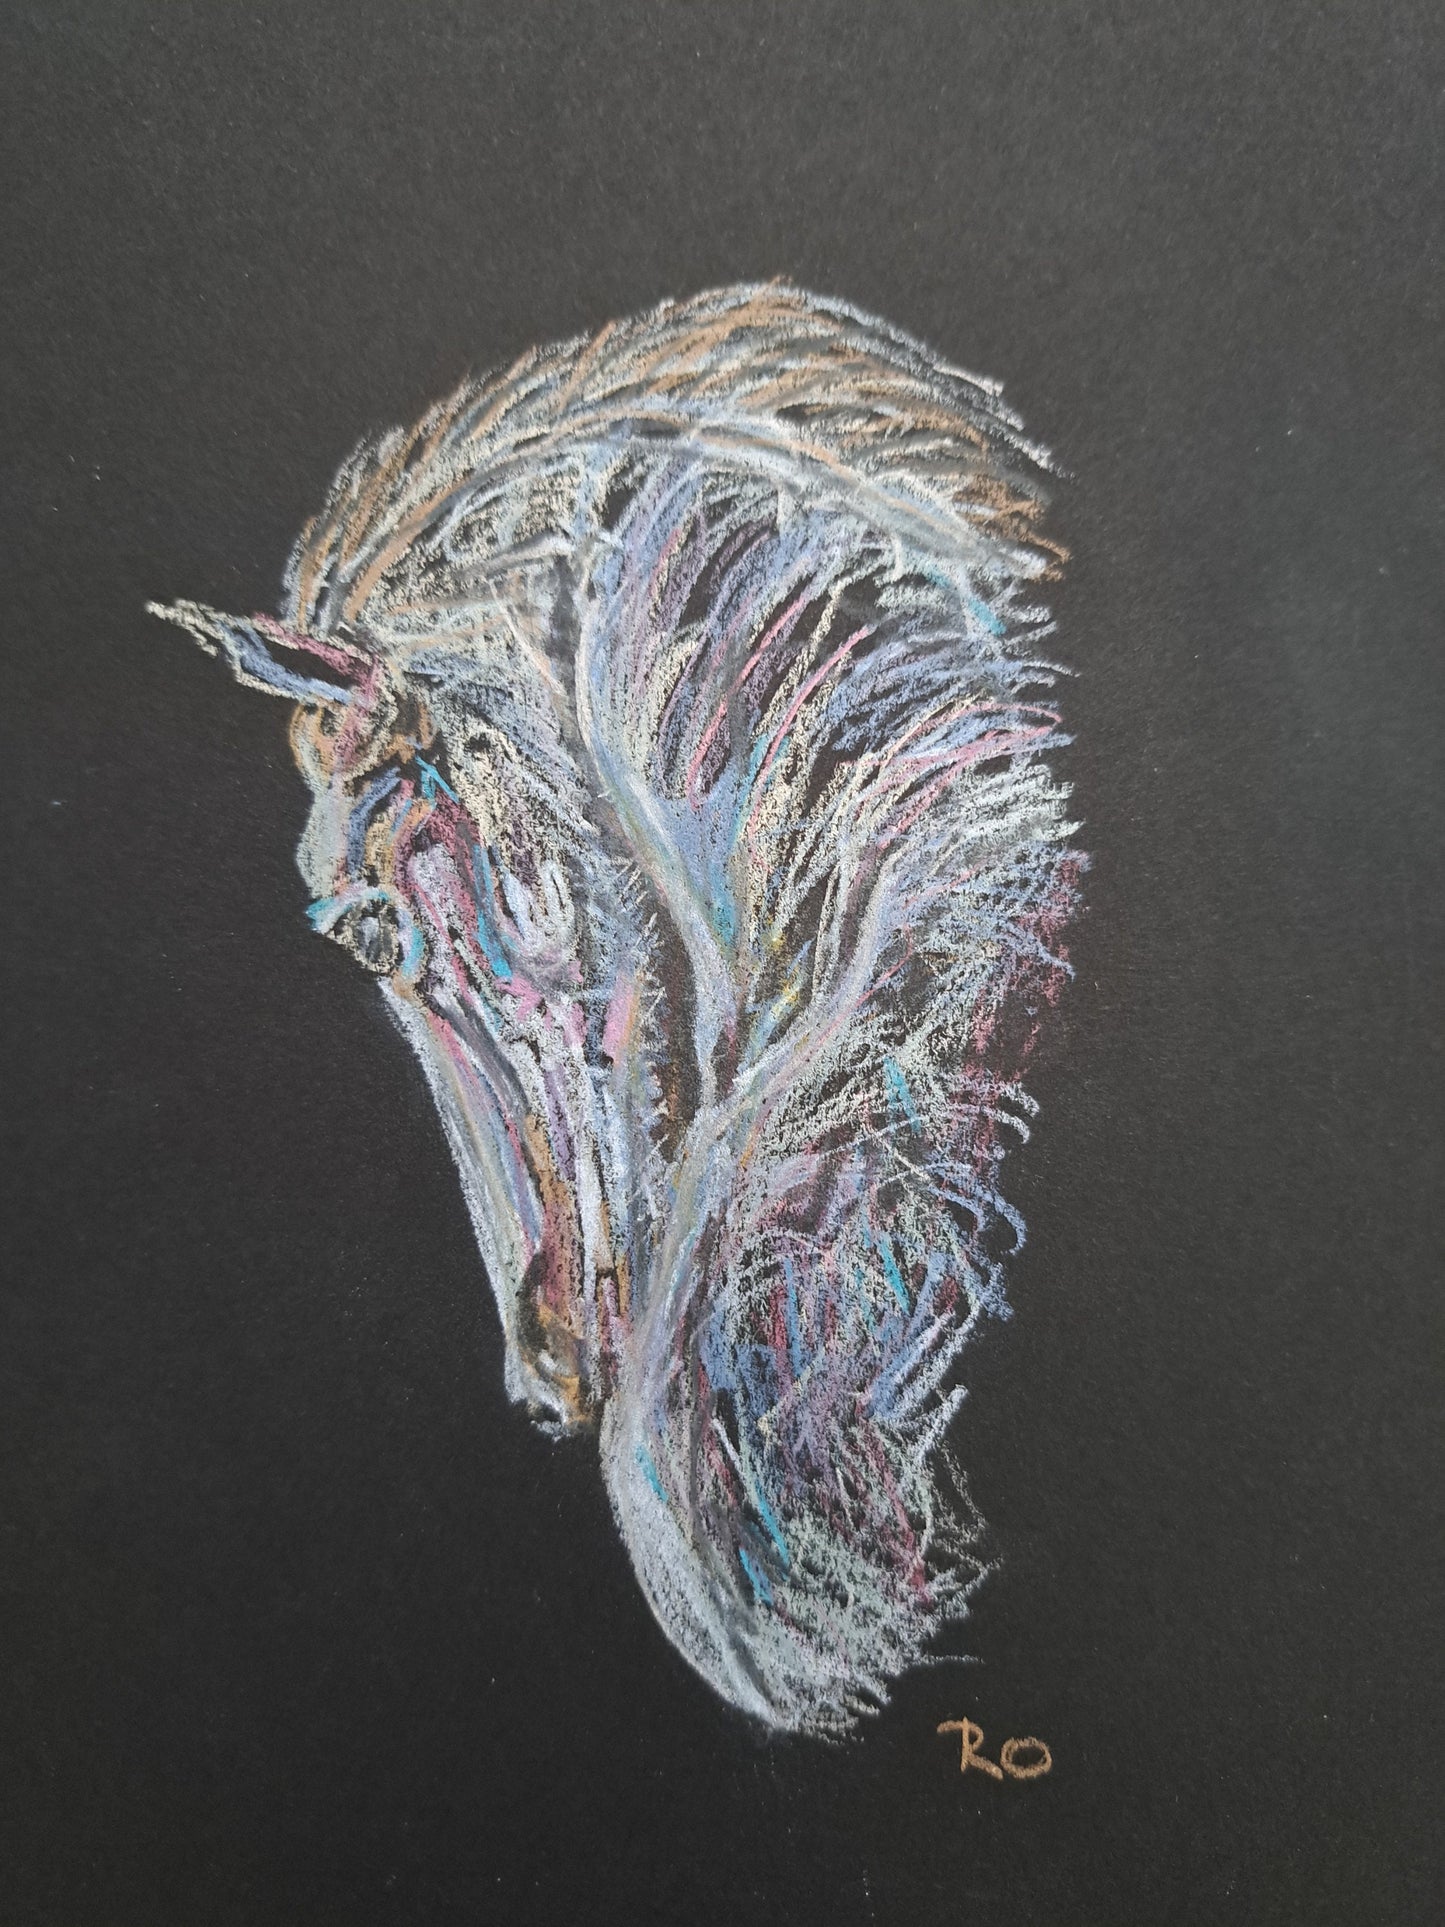 Metallic Horse Pencil Drawing on Black Paper